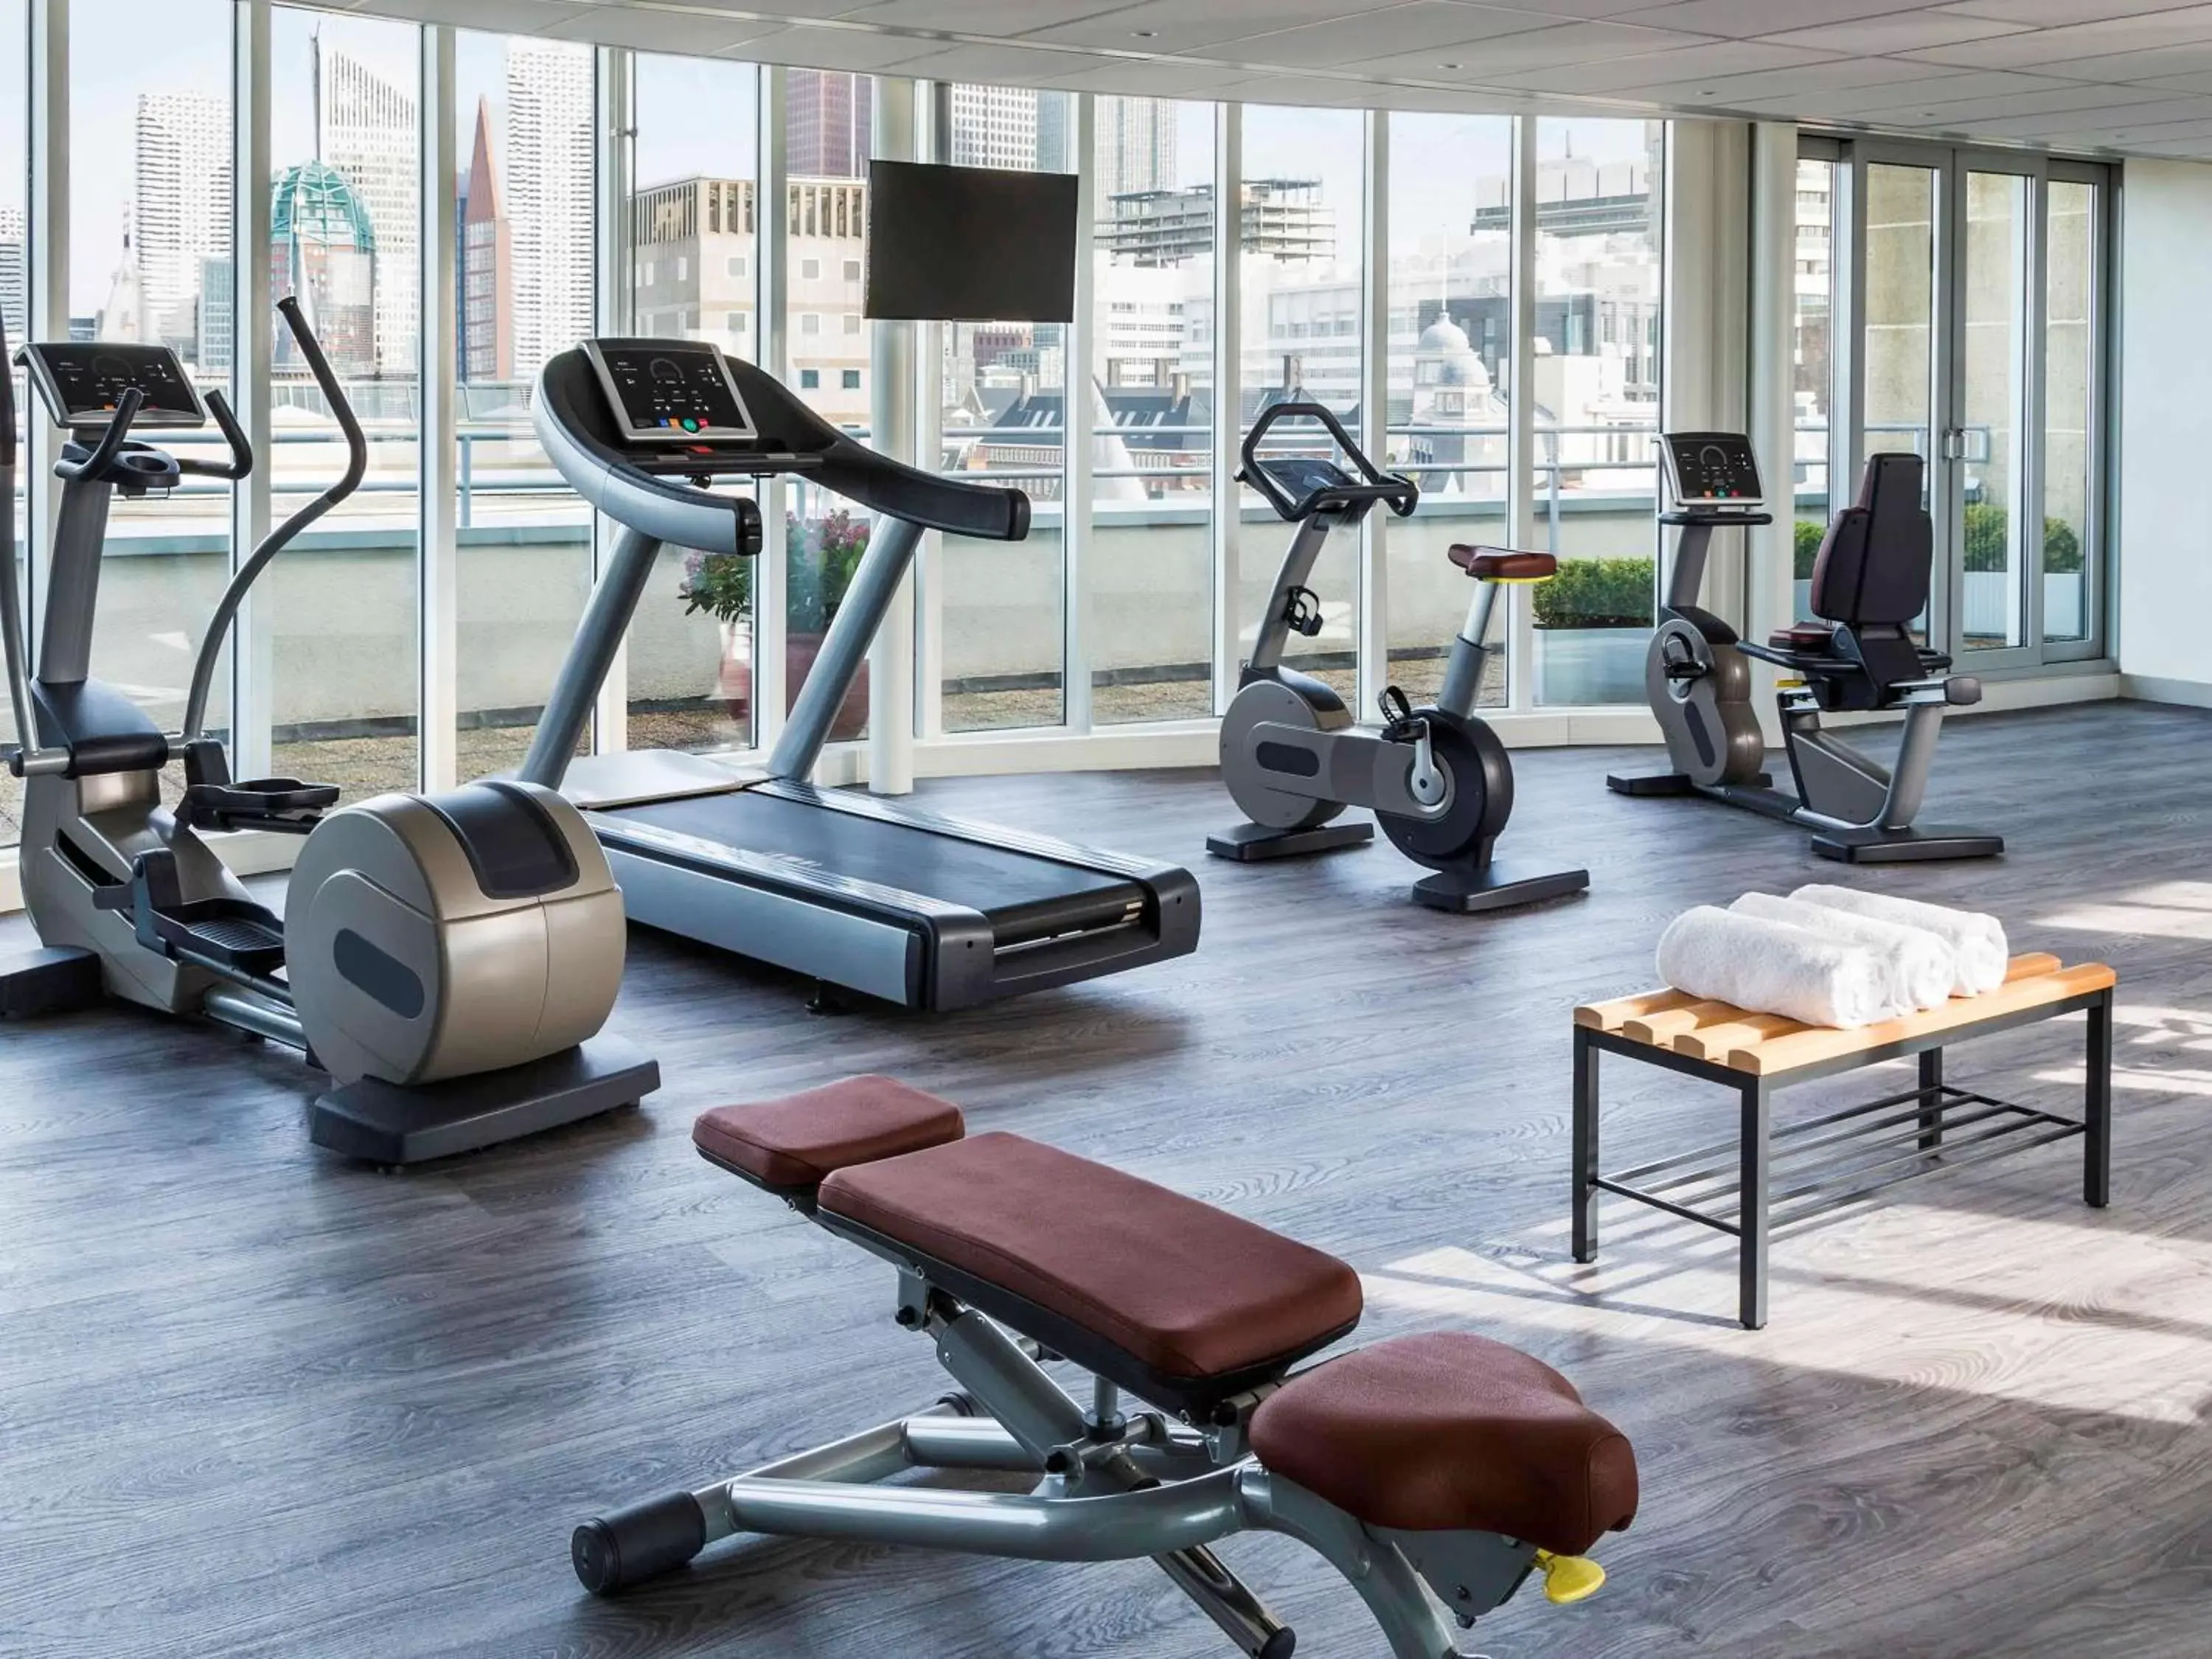 Fitness centre/facilities, Fitness Center/Facilities in Novotel Den Haag City Centre, fully renovated